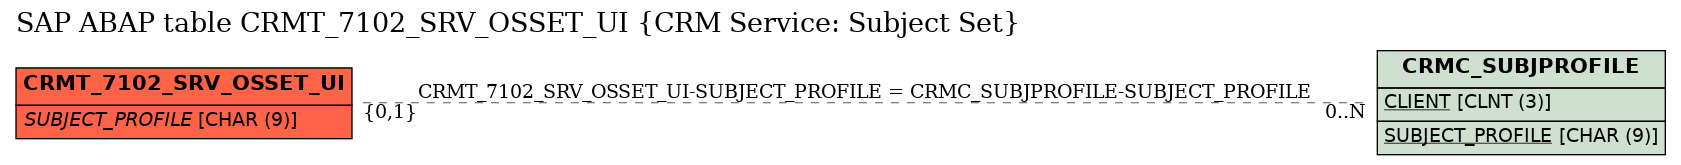 E-R Diagram for table CRMT_7102_SRV_OSSET_UI (CRM Service: Subject Set)